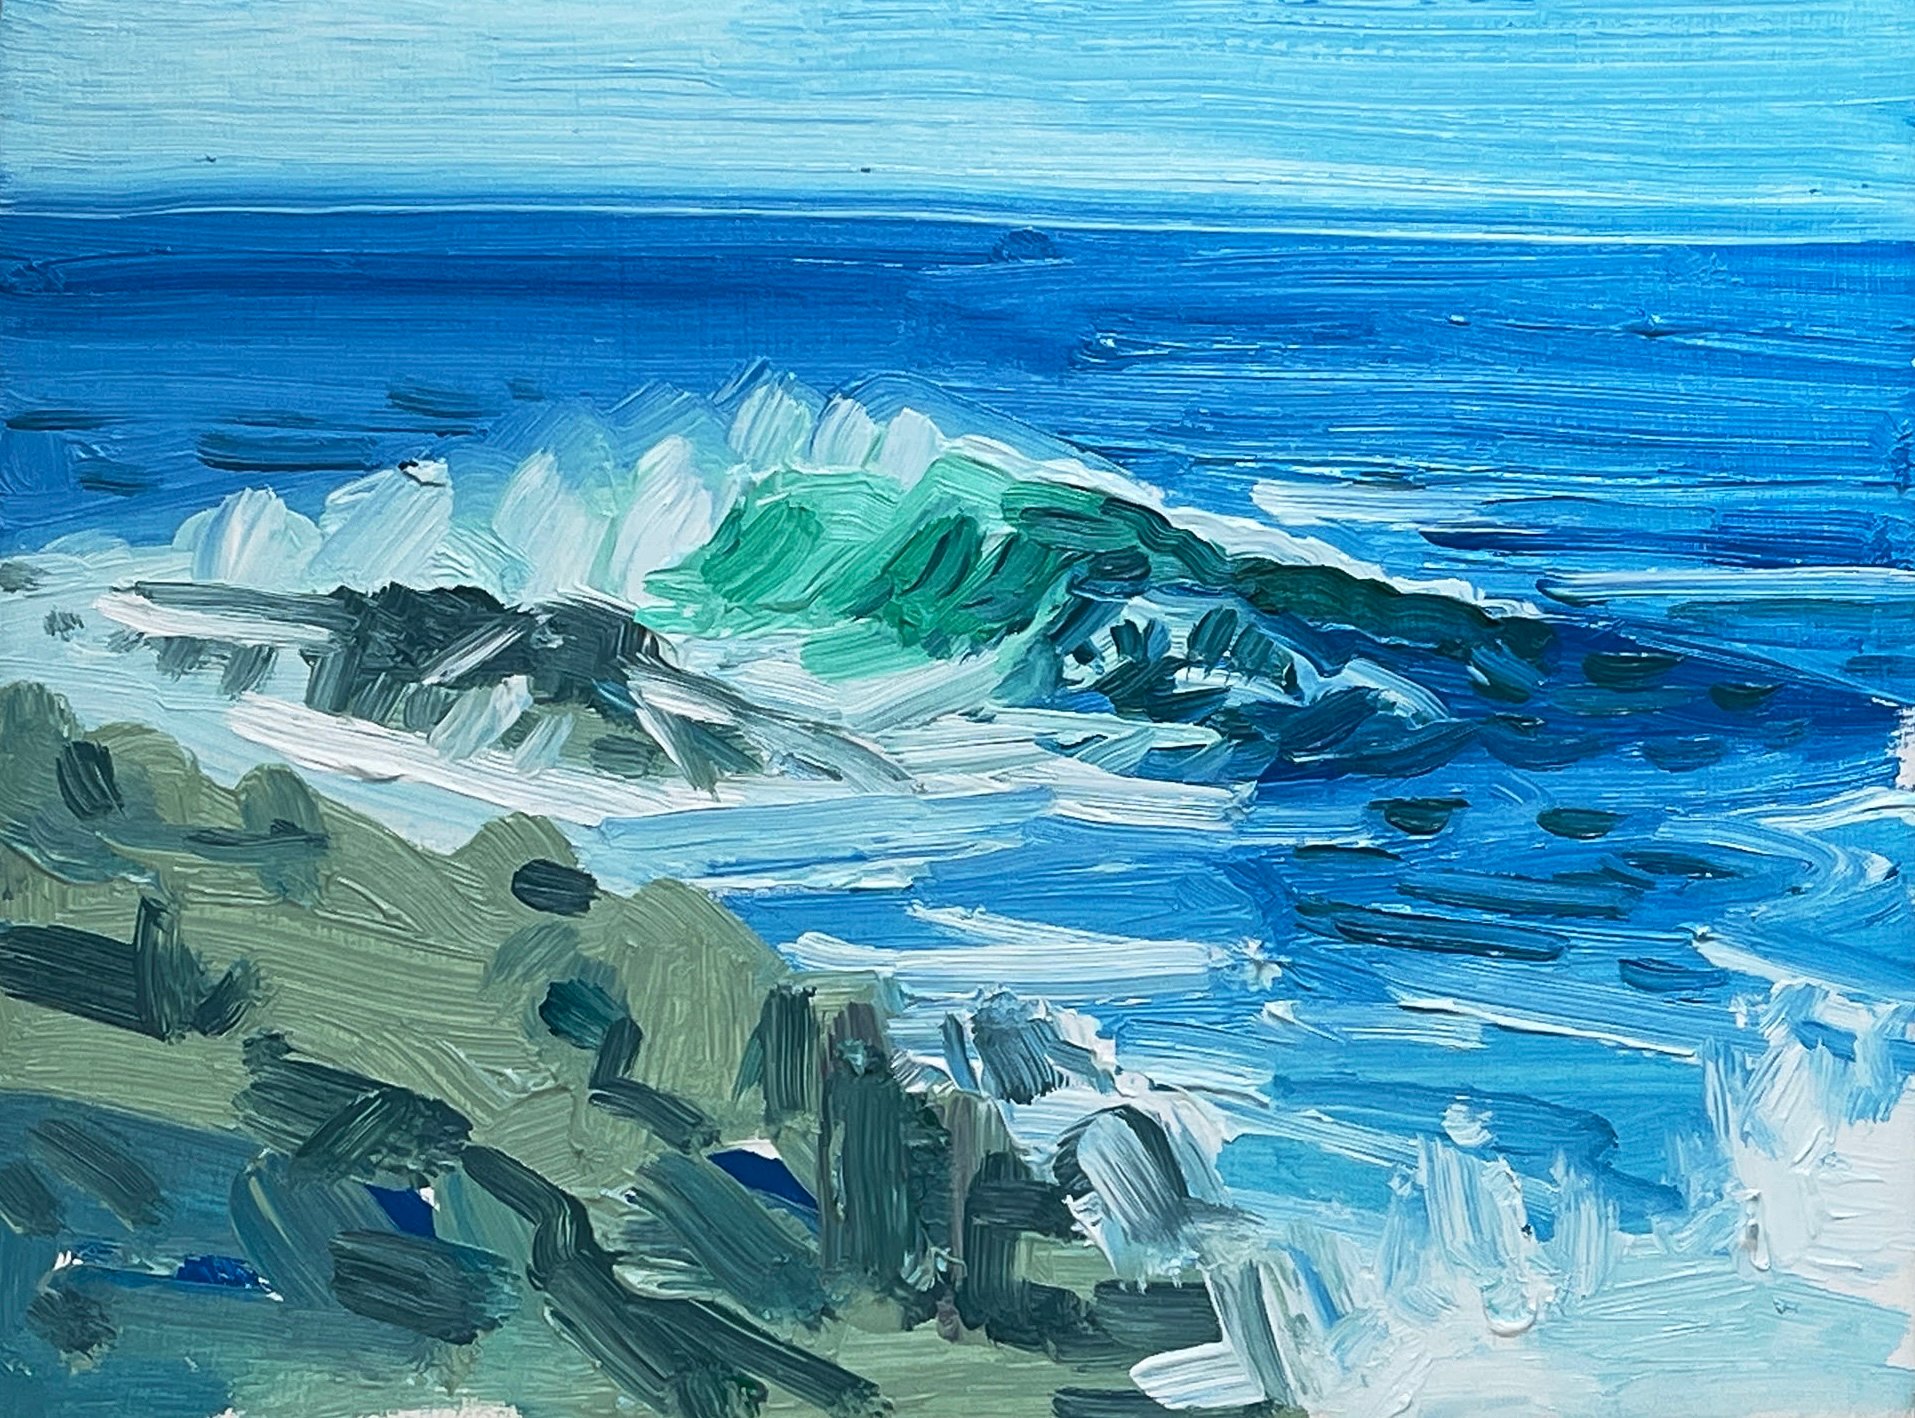 Painting of waves by Mara Korkola